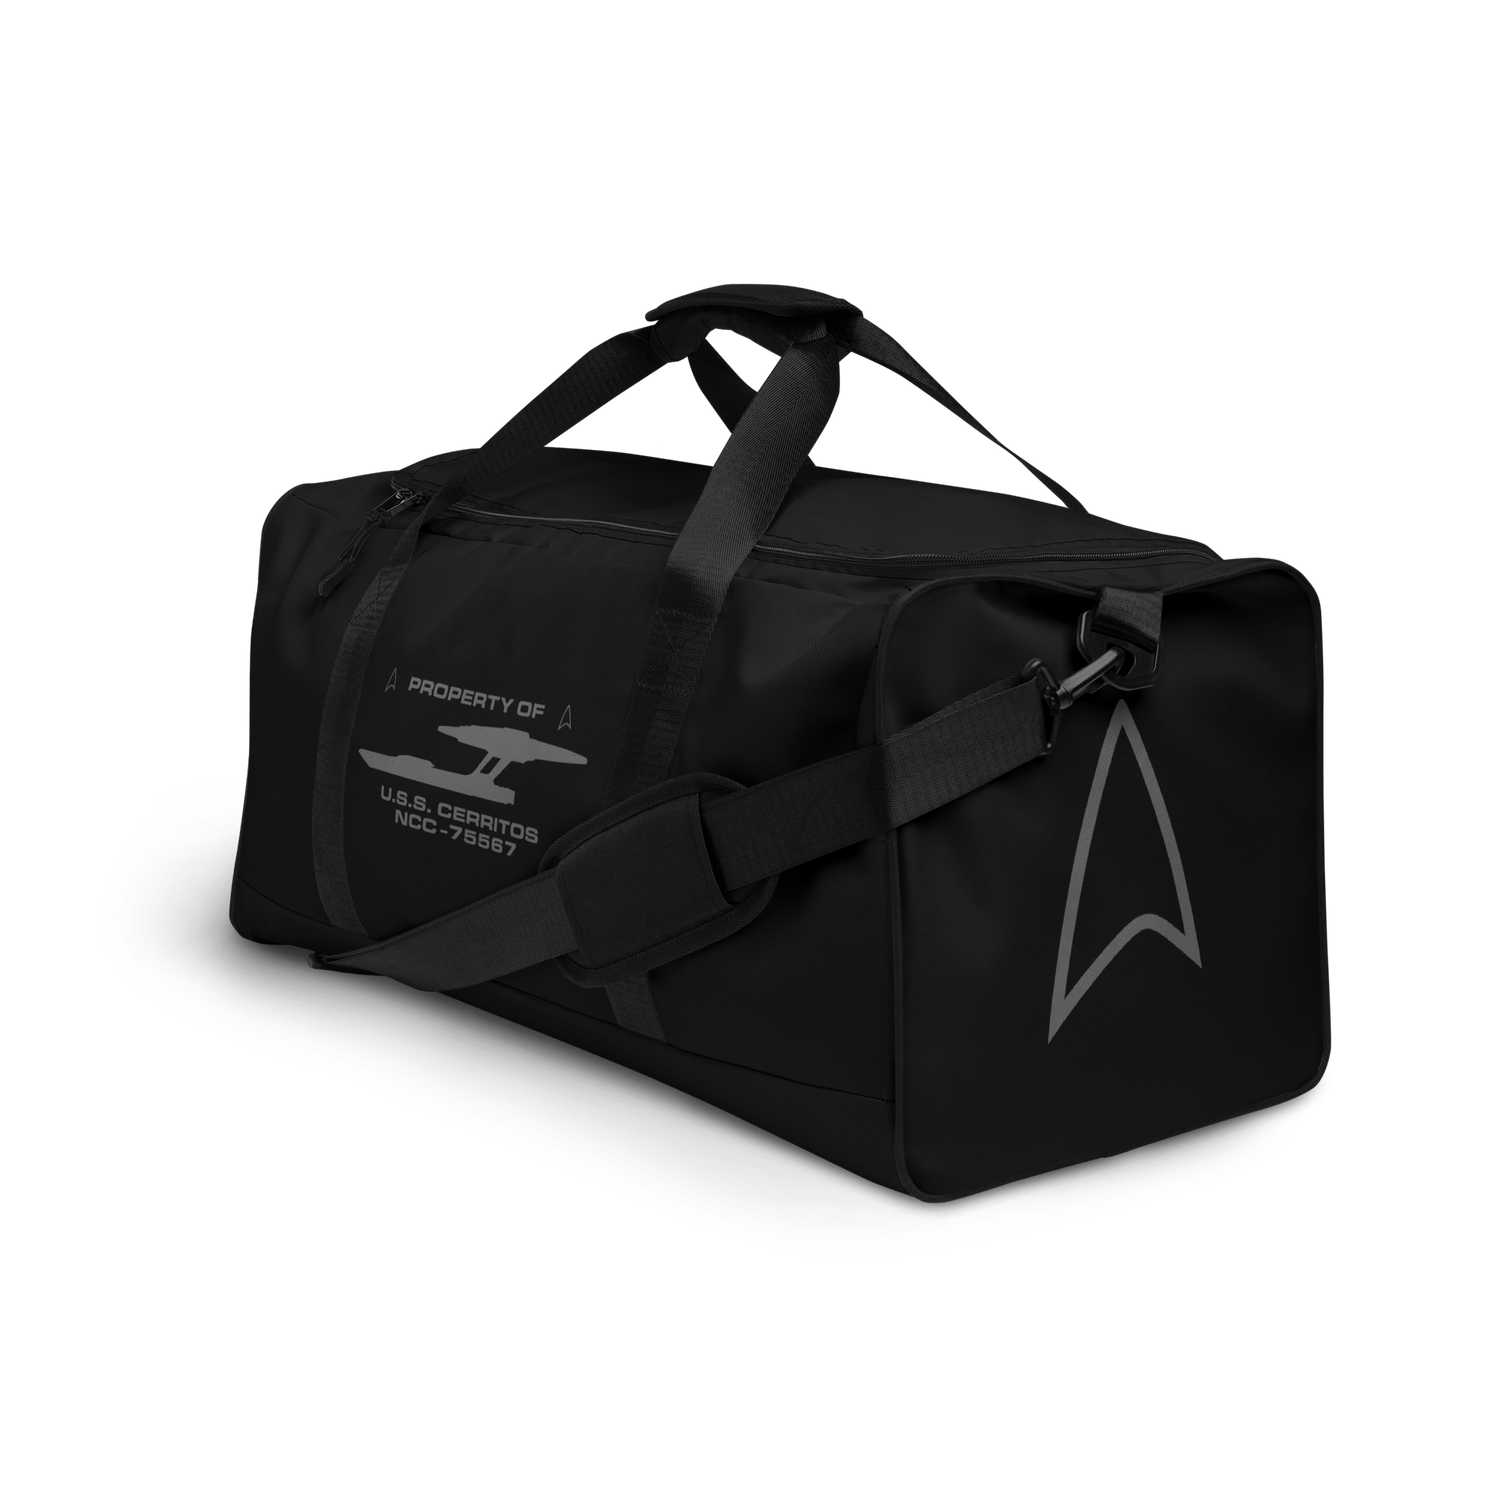 Star Trek: Lower Decks U.S.S. Cerritos Duffle Bag - Paramount Shop